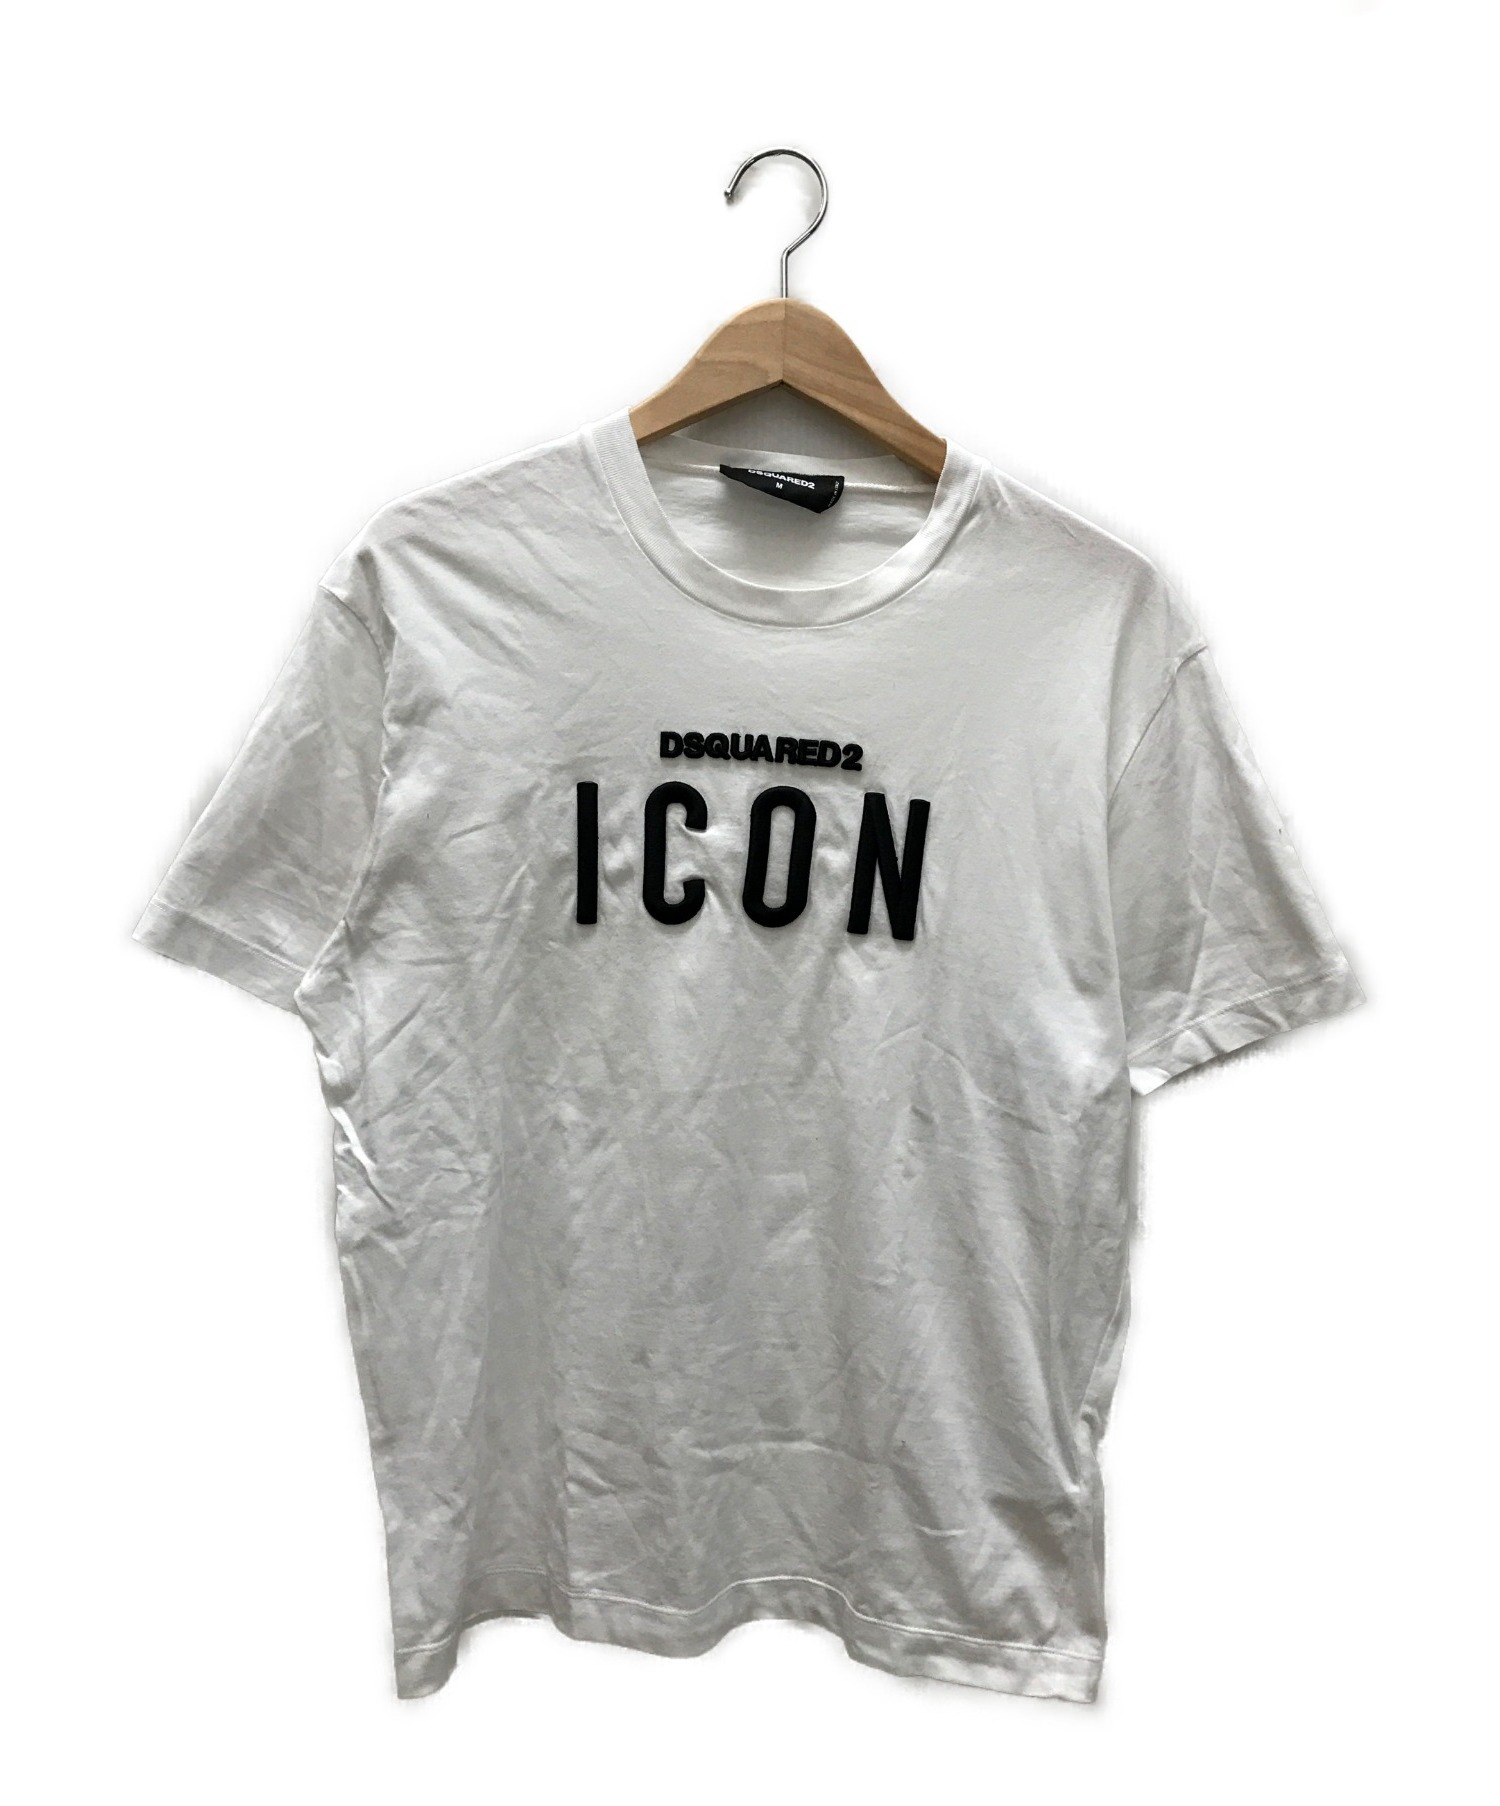 Dsquared2 Tシャツ ICON 刺繍